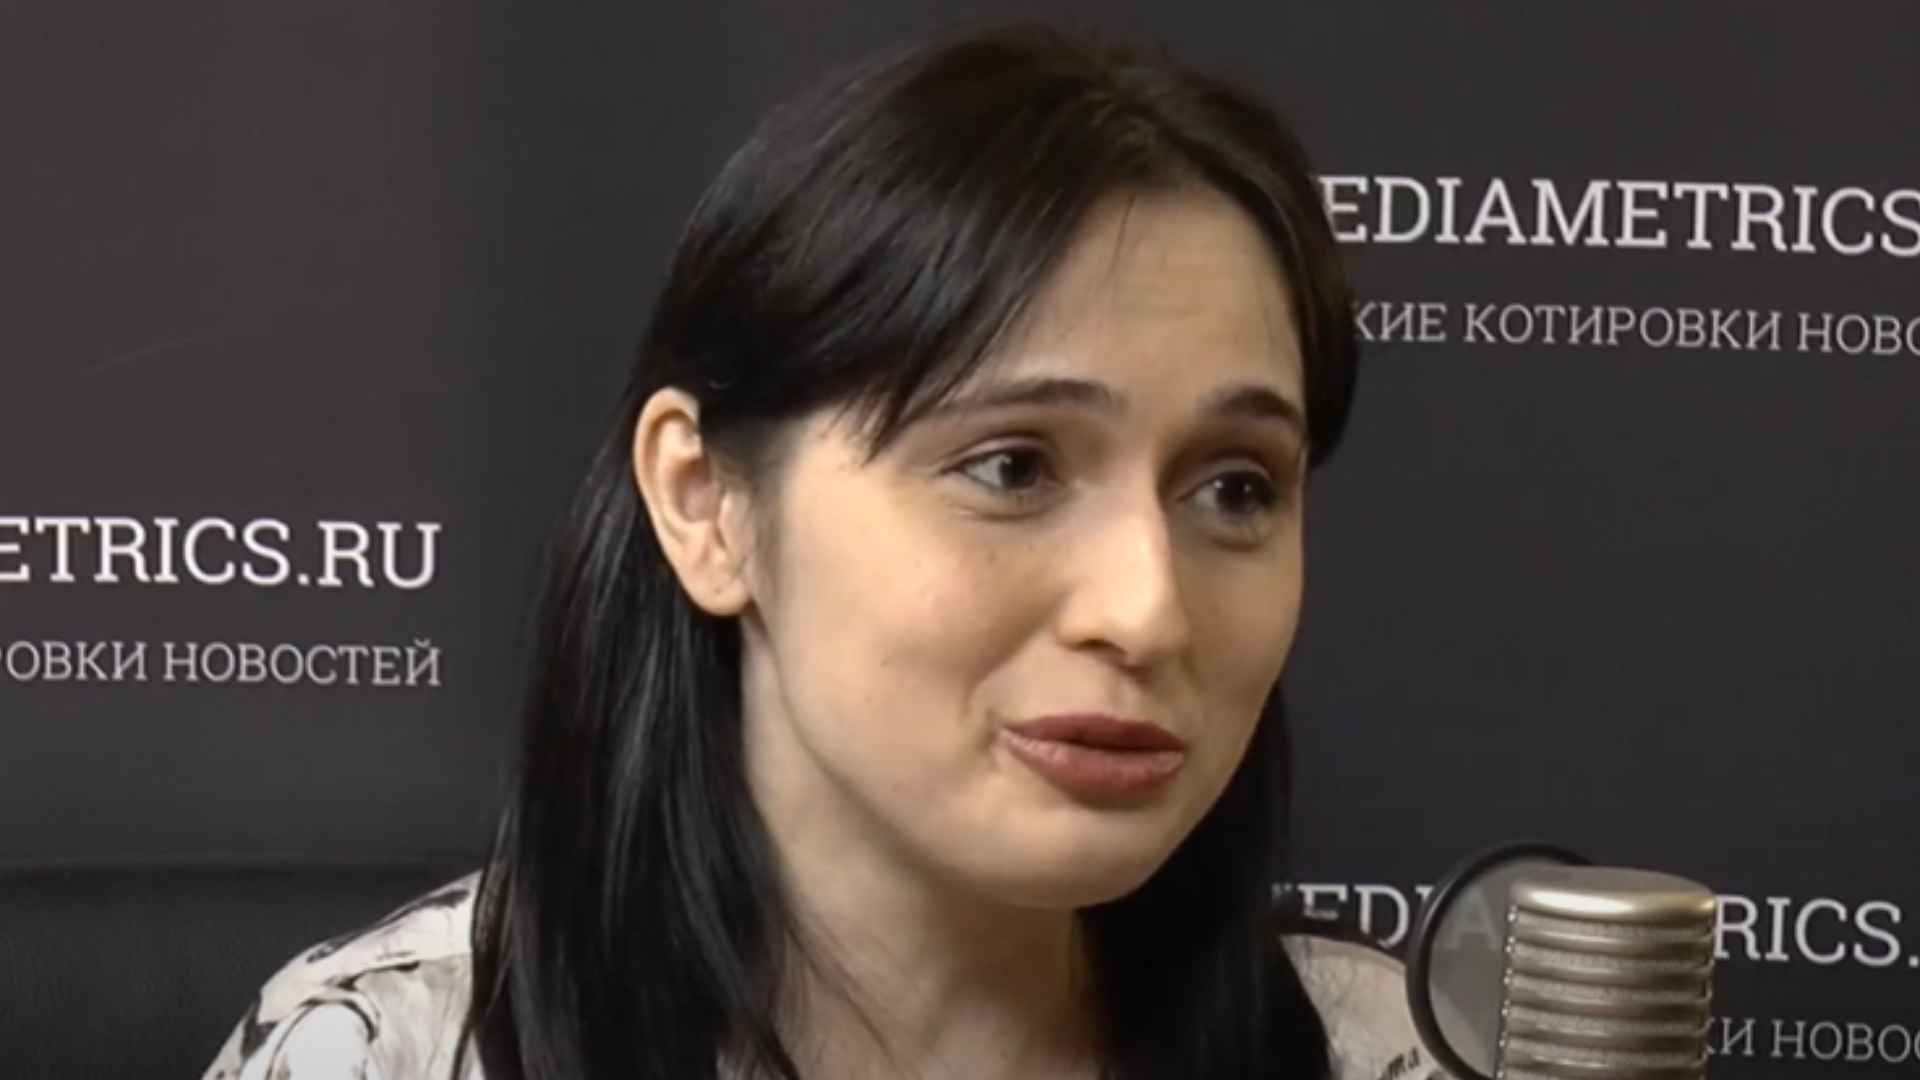 Наталия Герасимова, врач-диетолог